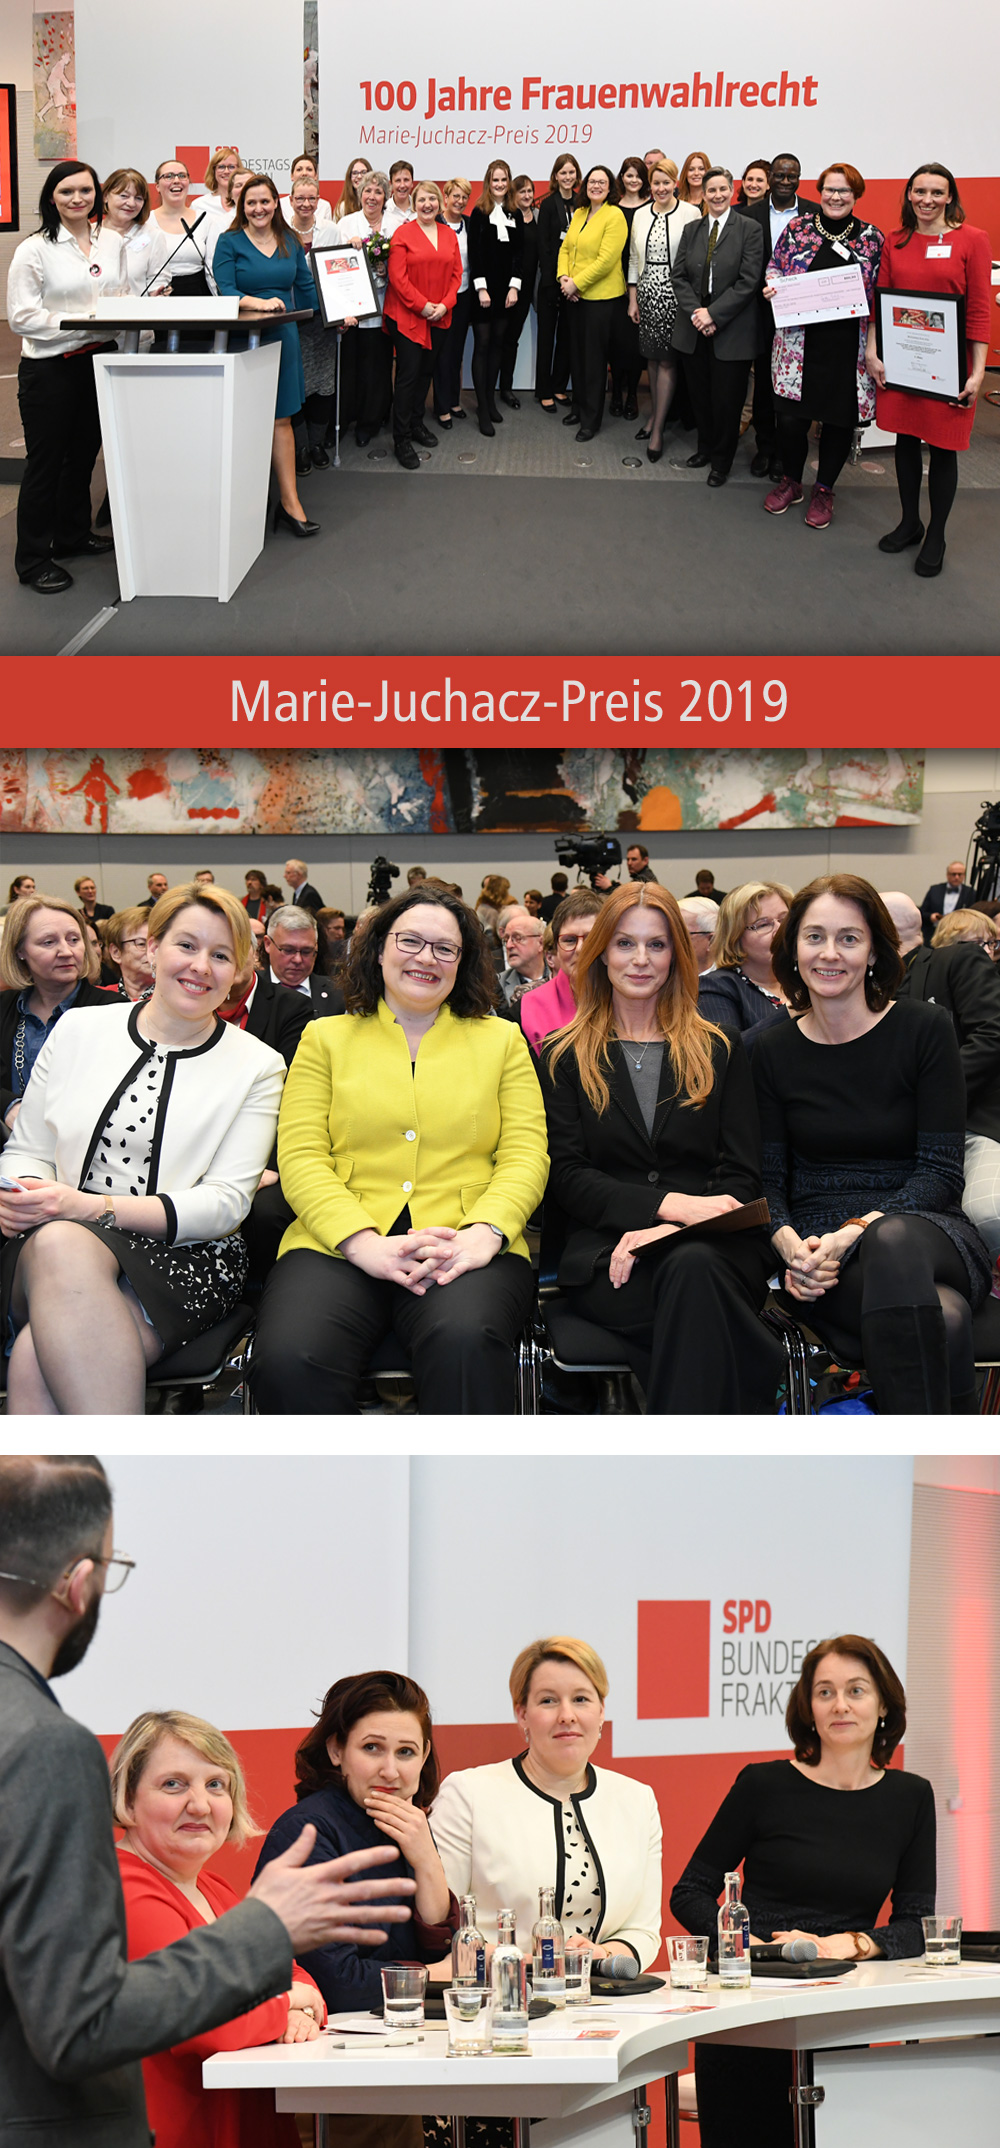 Marie-Juchacz-Preis